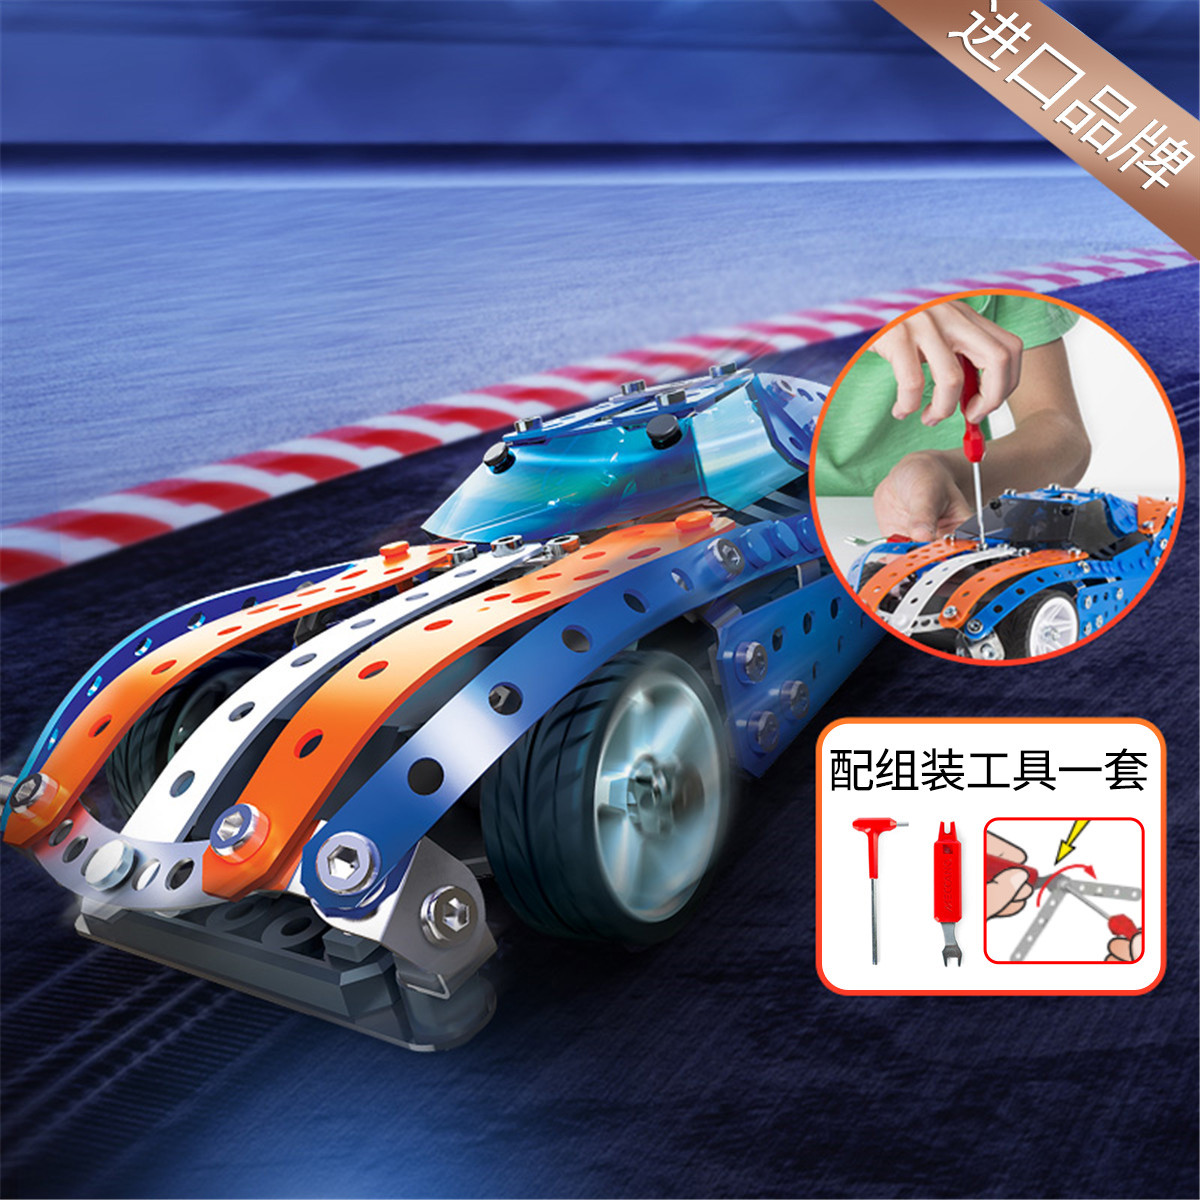 meccano金属拼装电动赛车趣味玩具科技益智组装25种玩法